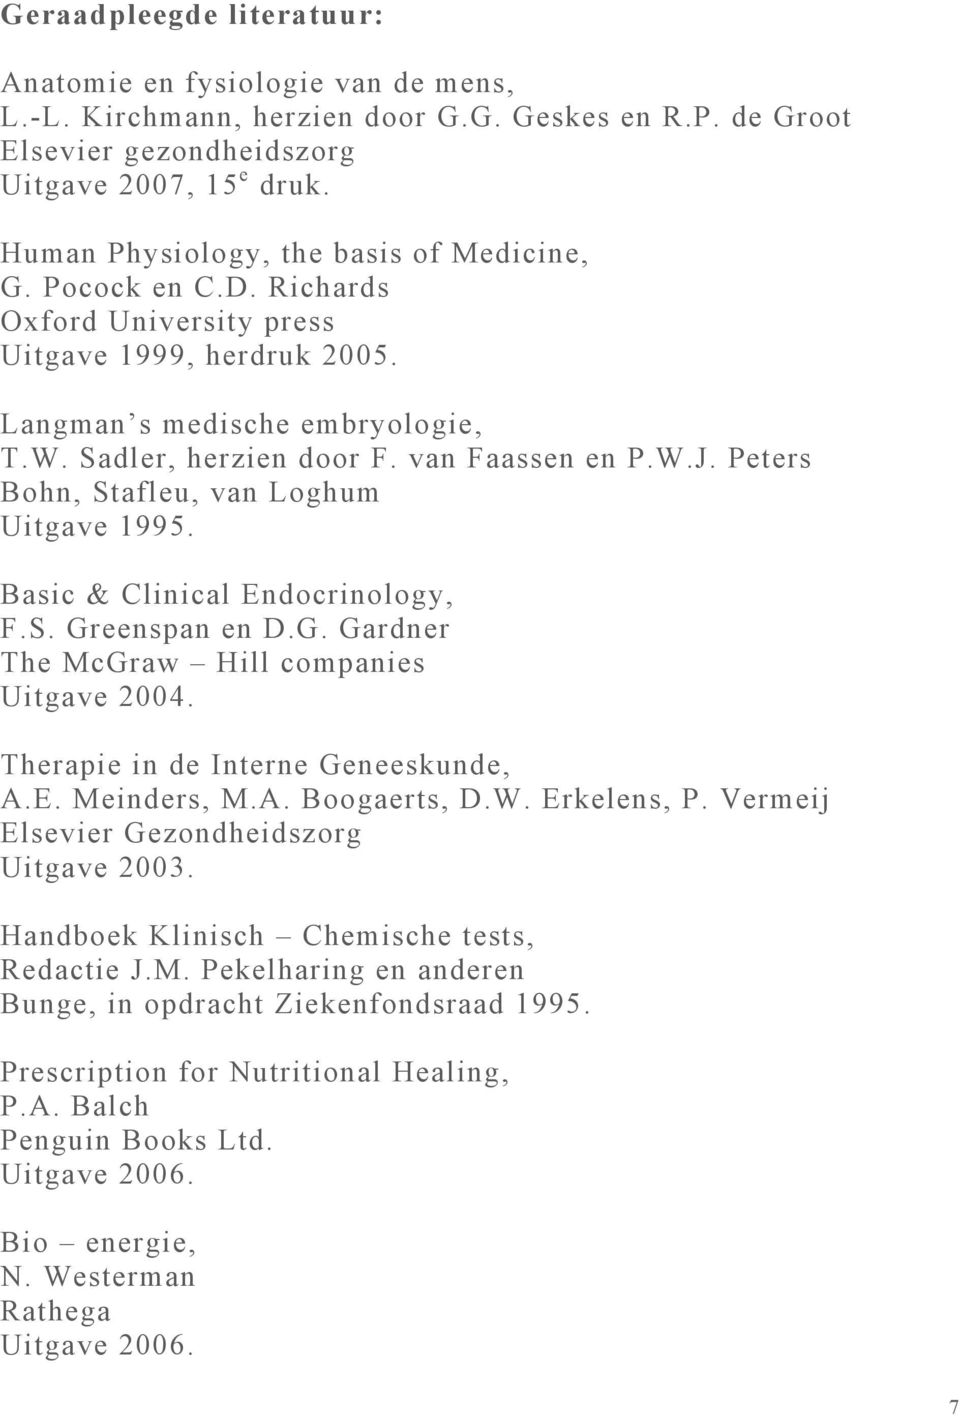 Peters Bohn, Stafleu, van Loghum Uitgave 1995. Basic & Clinical Endocrinology, F.S. Greenspan en D.G. Gardner The McGraw Hill companies Uitgave 2004. Therapie in de Interne Geneeskunde, A.E. Meinders, M.